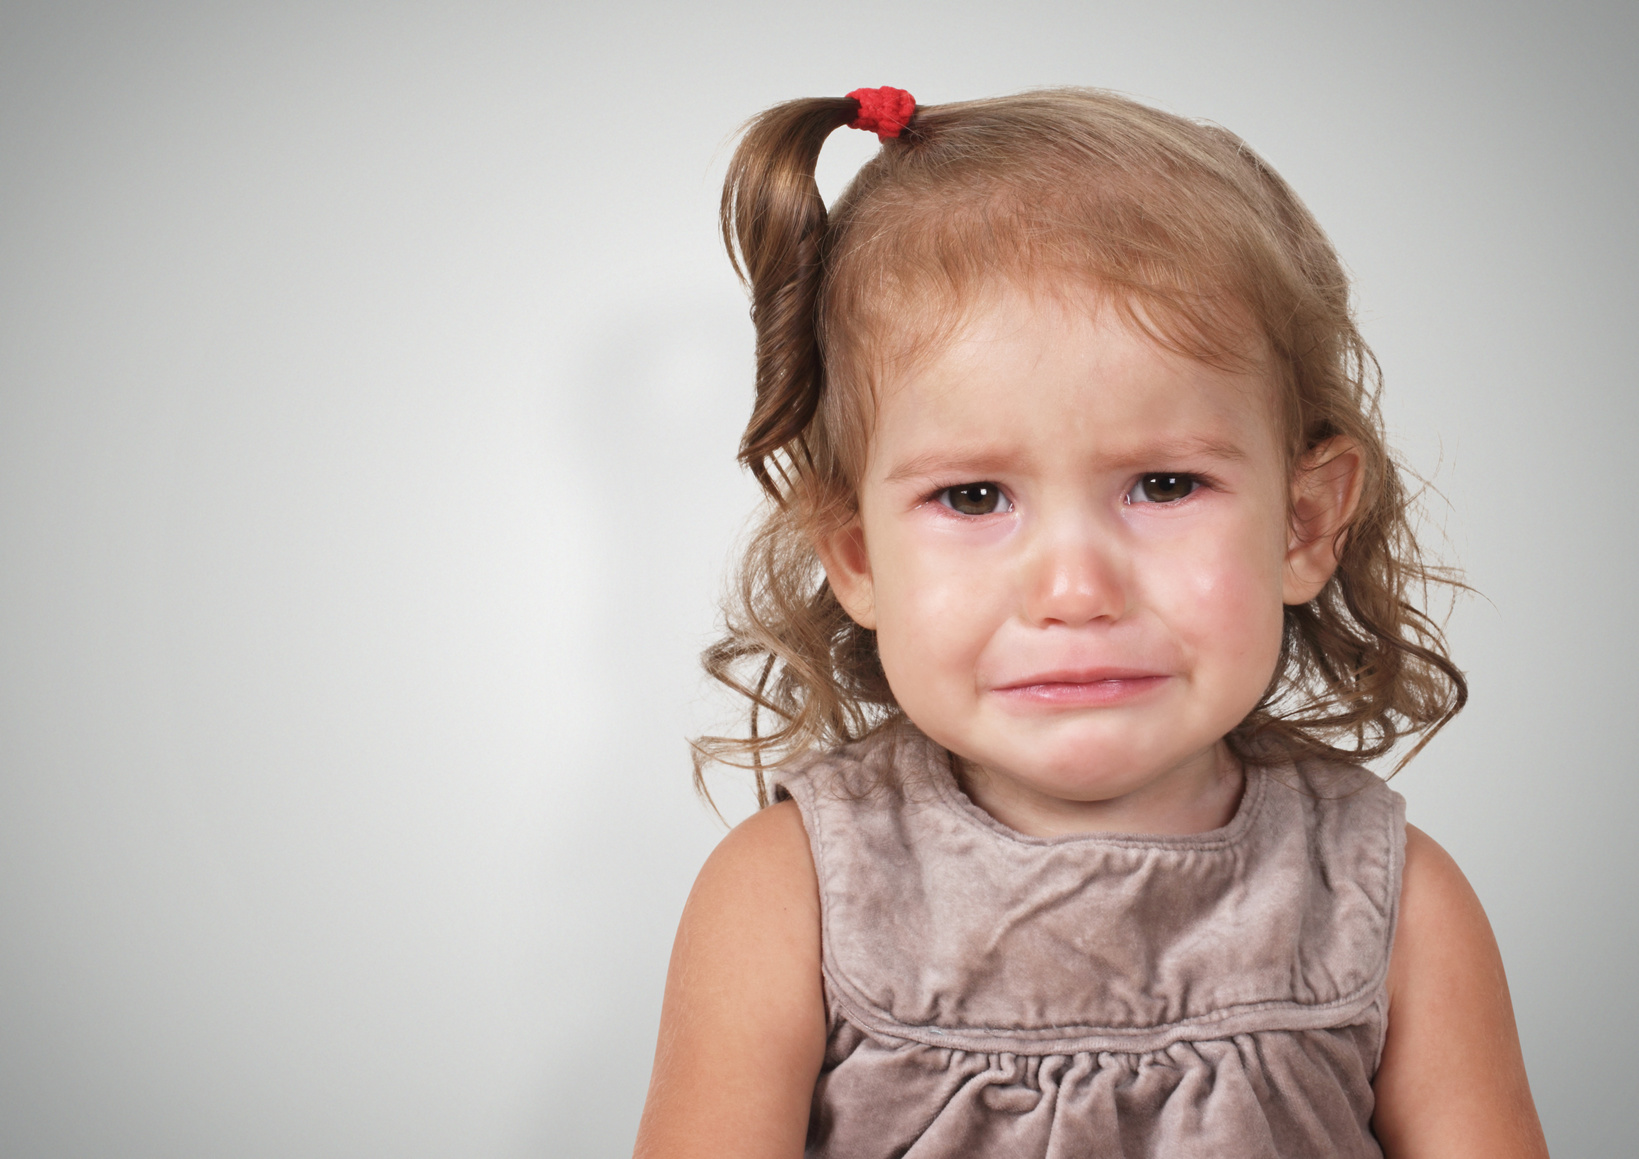 Portrait of sad crying baby girl